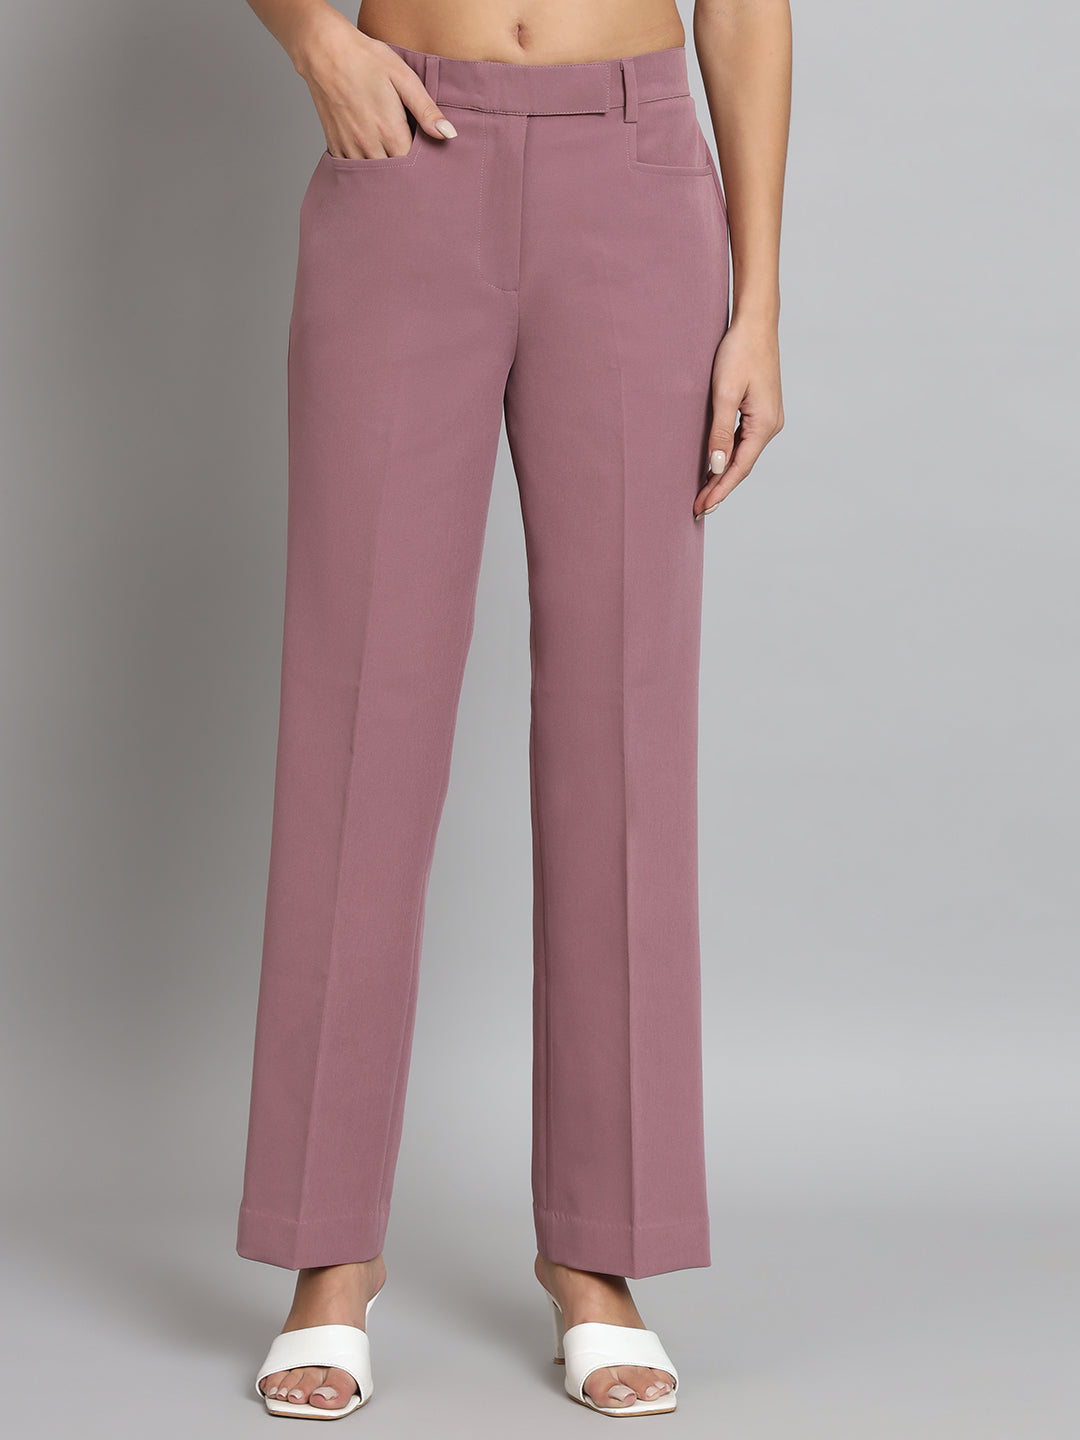 Regular Fit Trouser- Dusty Pink